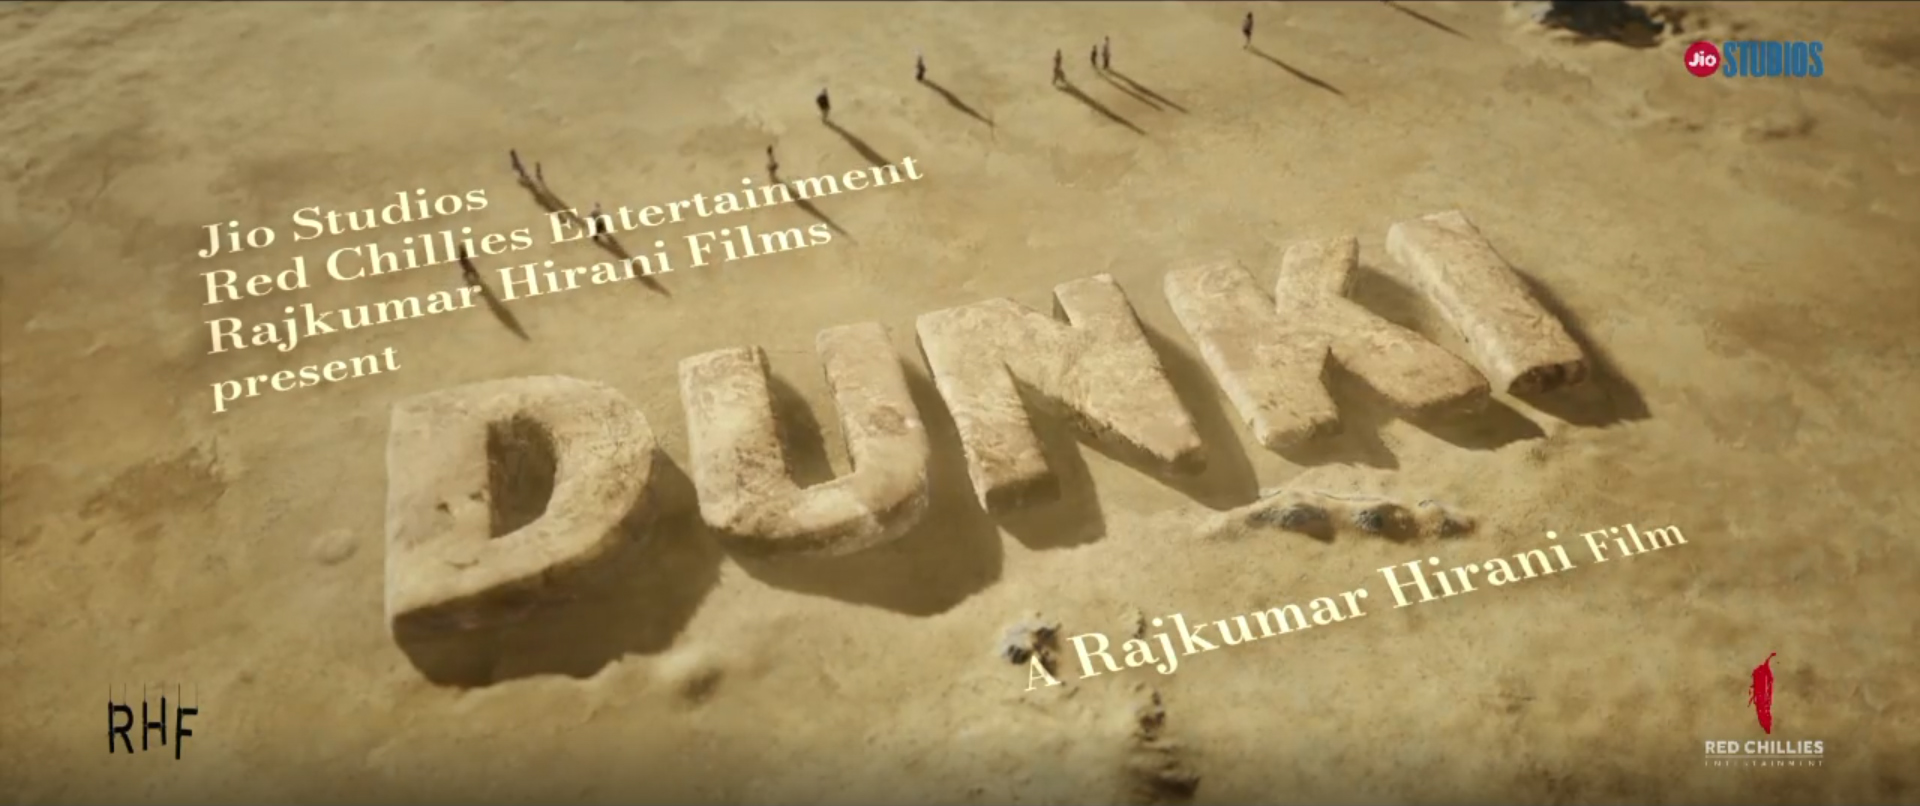 dunky film